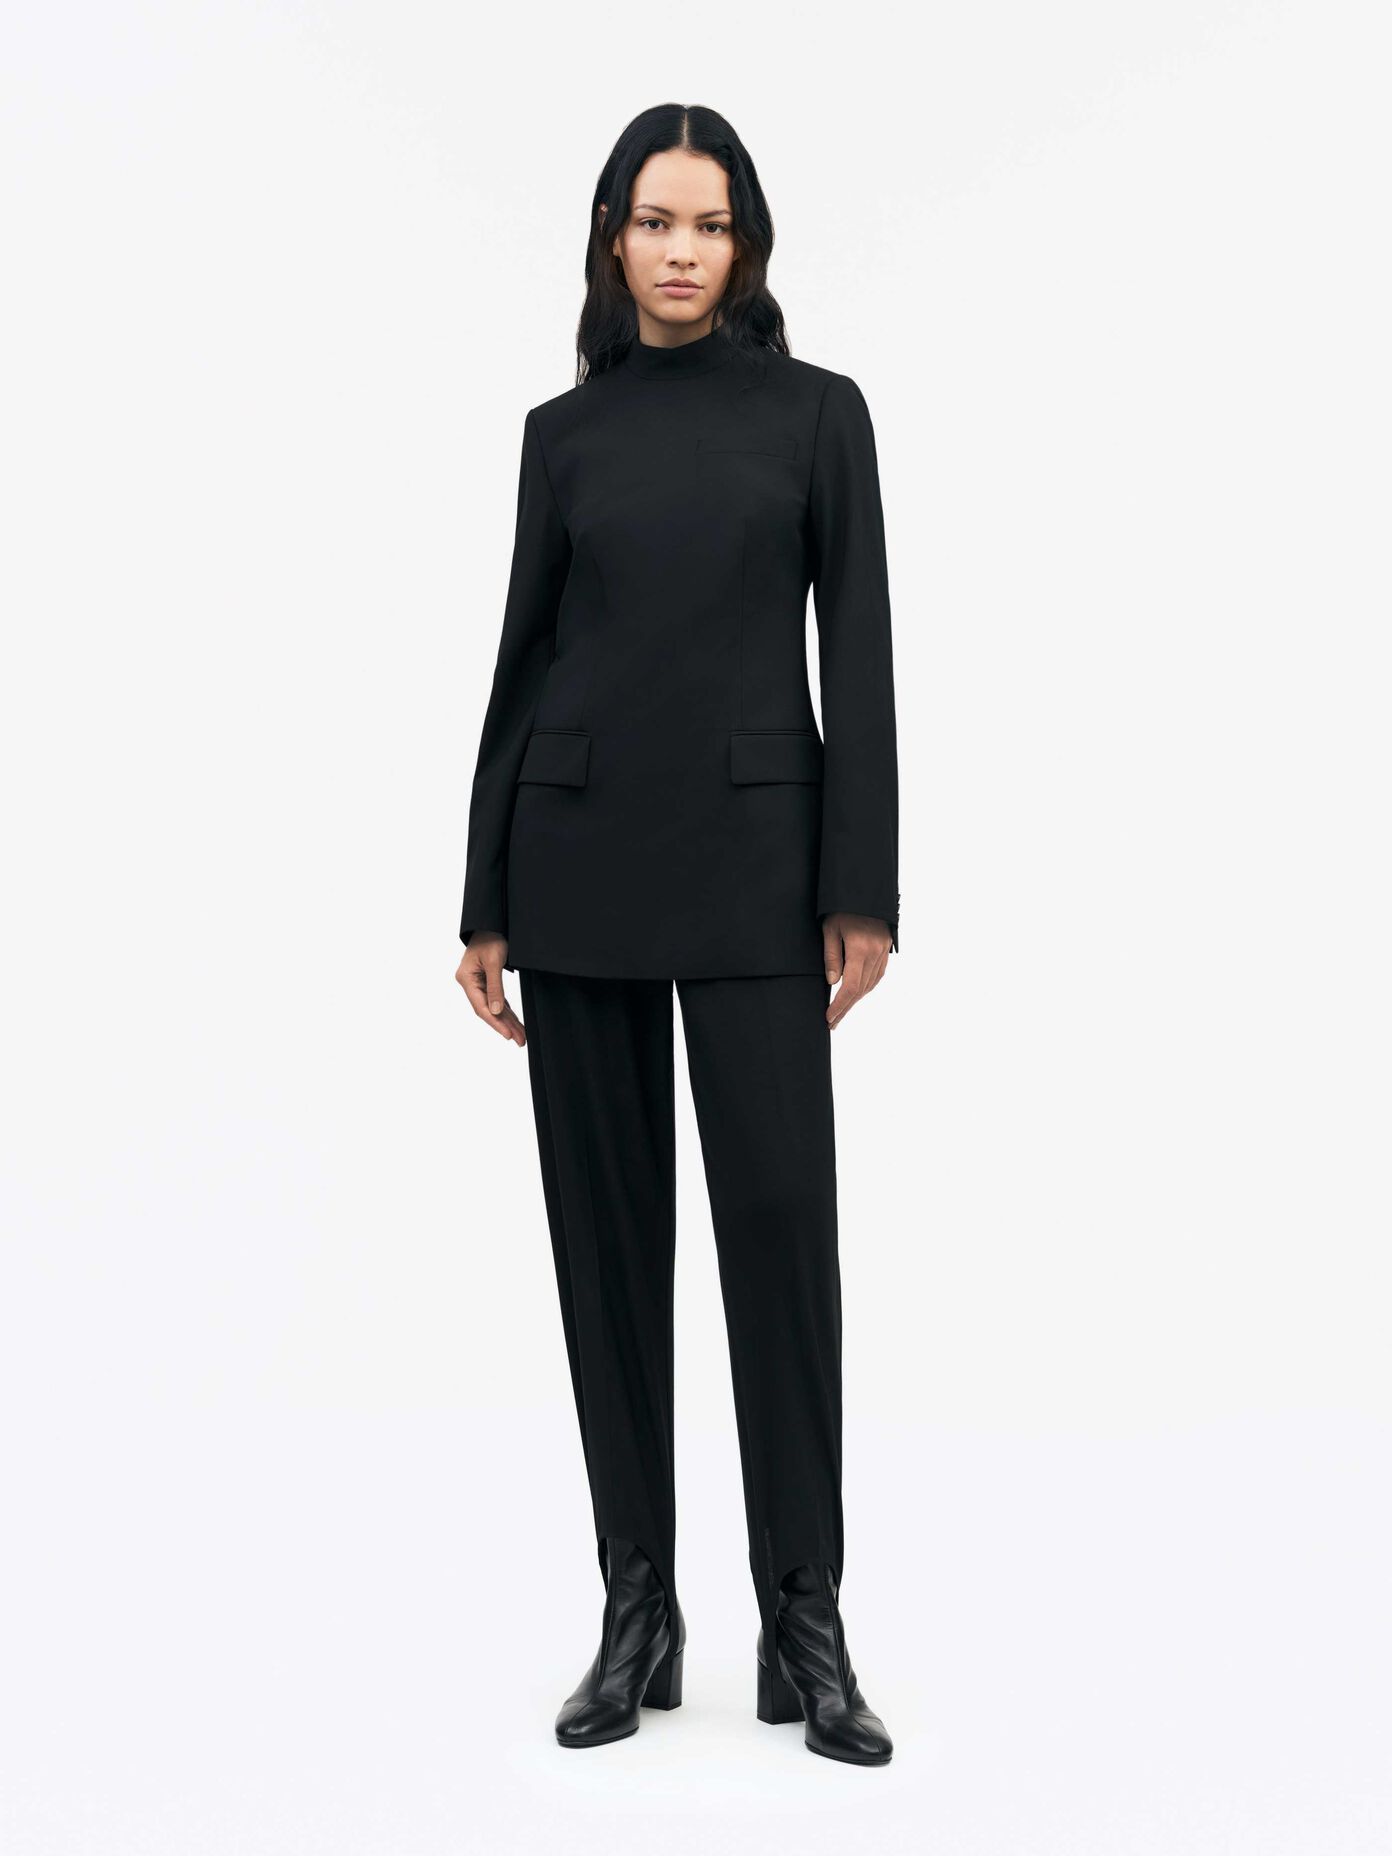 Women’s blazers. Shop designer blazers | Tiger of Sweden